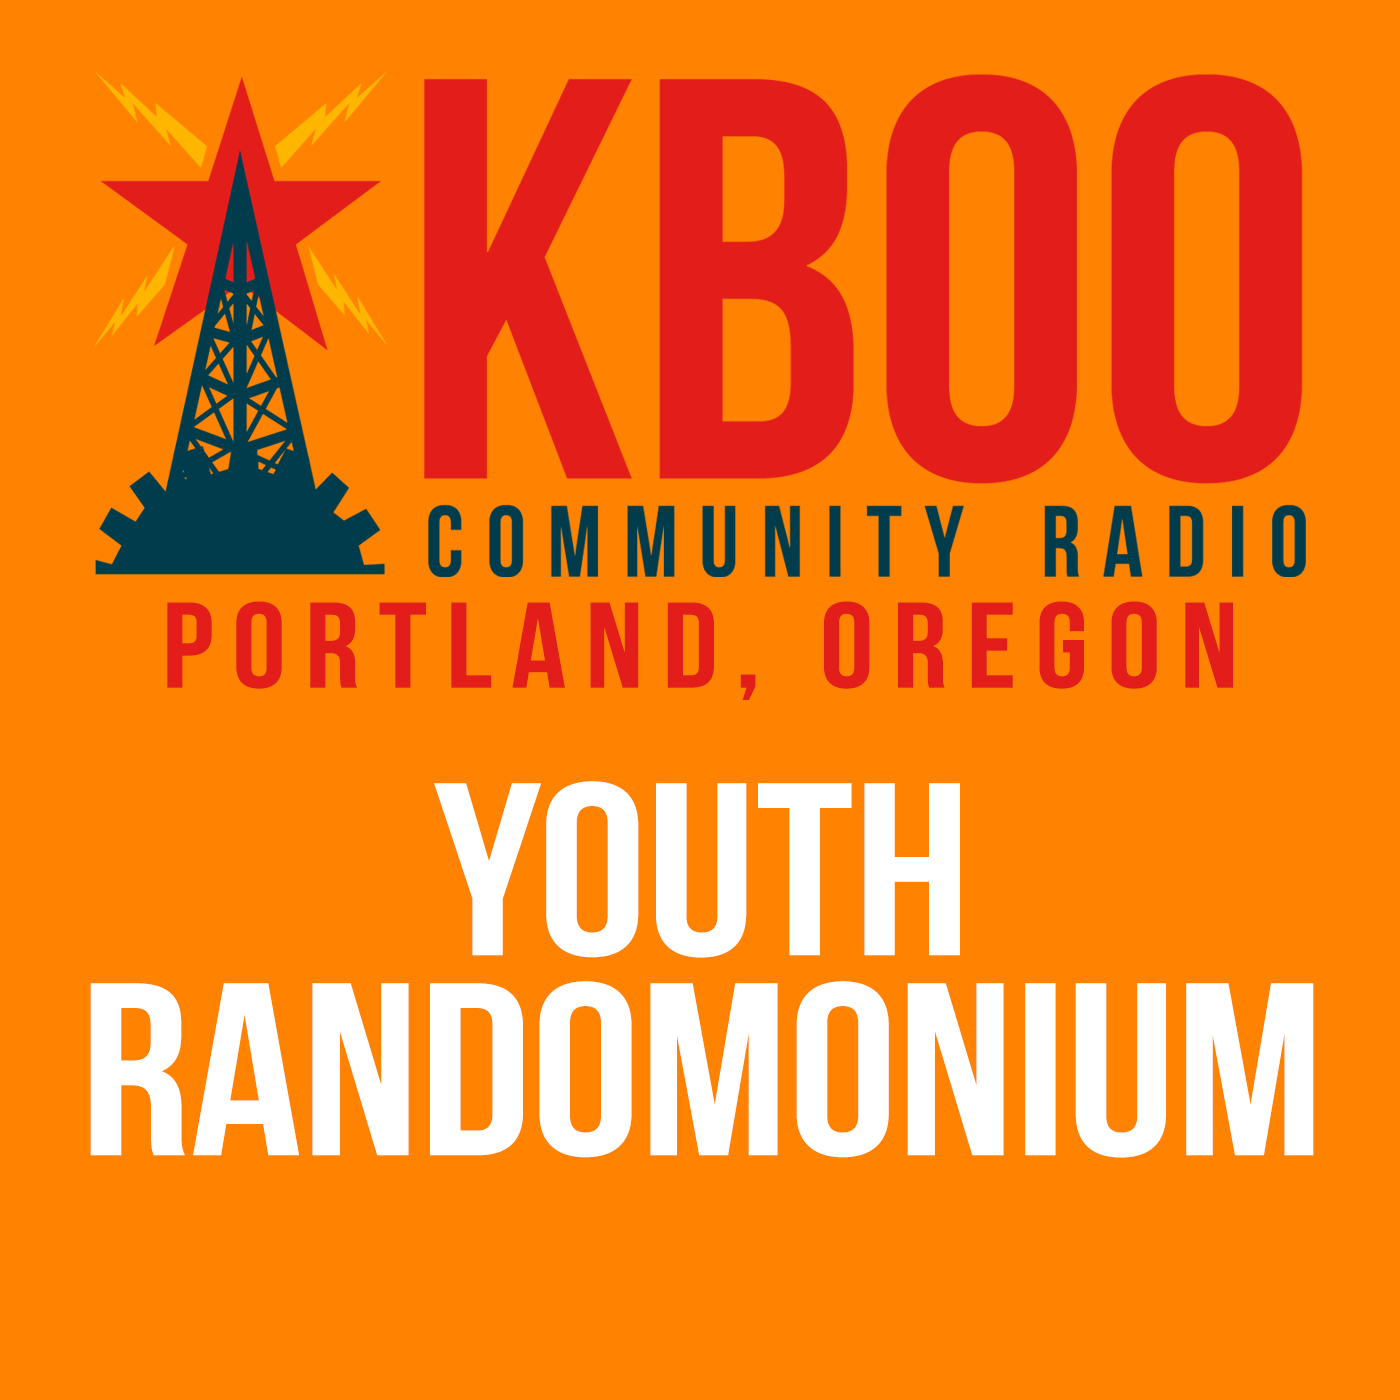 Youth Randomonium on 10/20/23